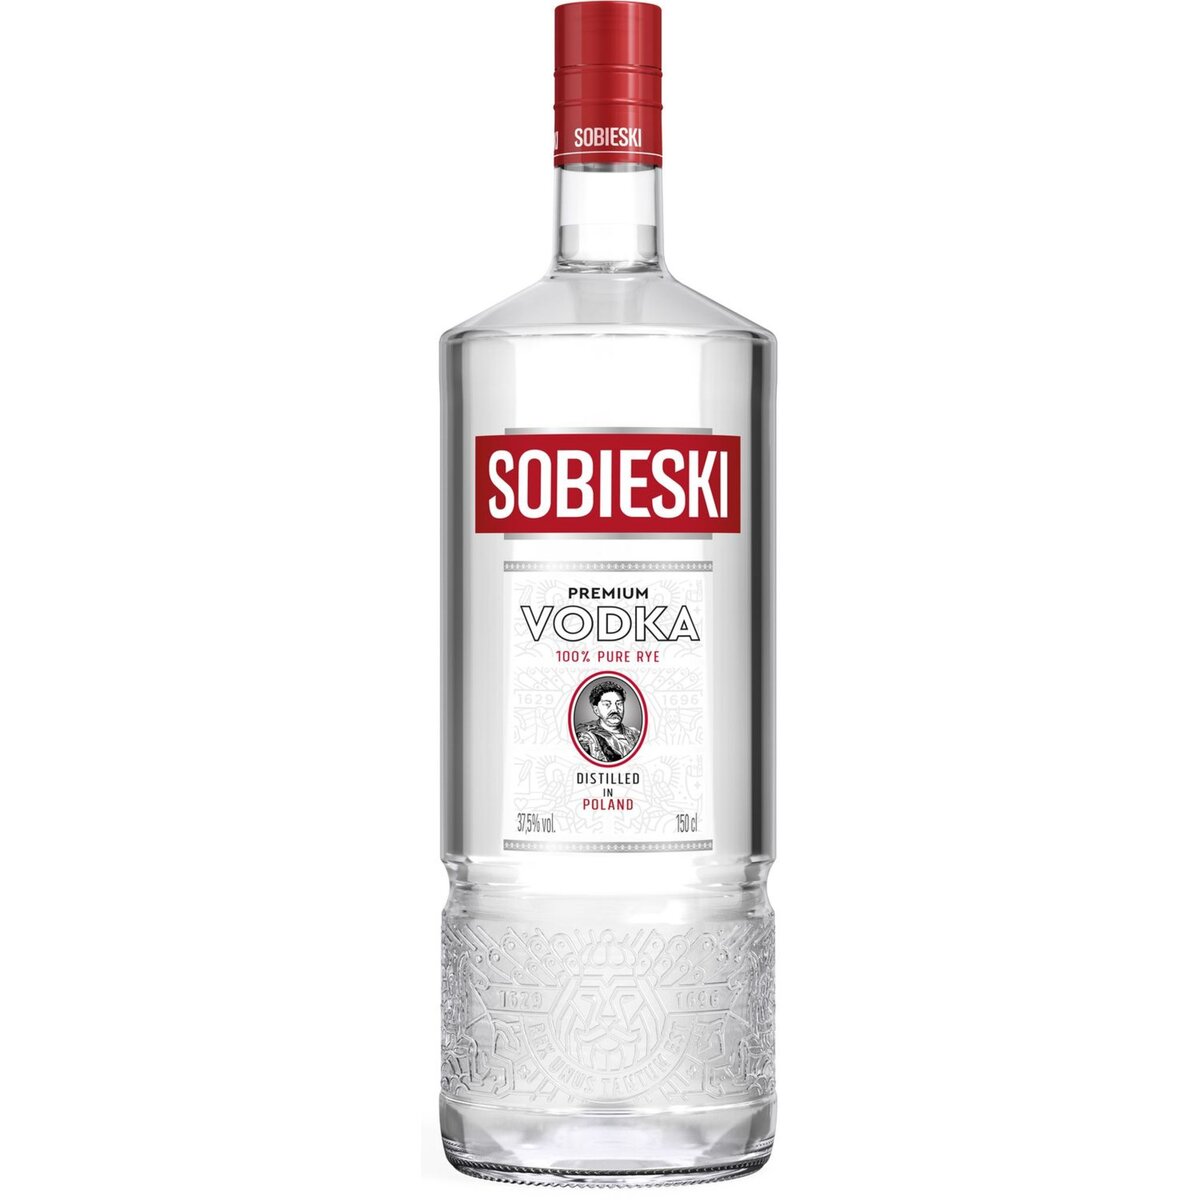 SOBIESKI Sobieski vodka 37,5° -1,5l